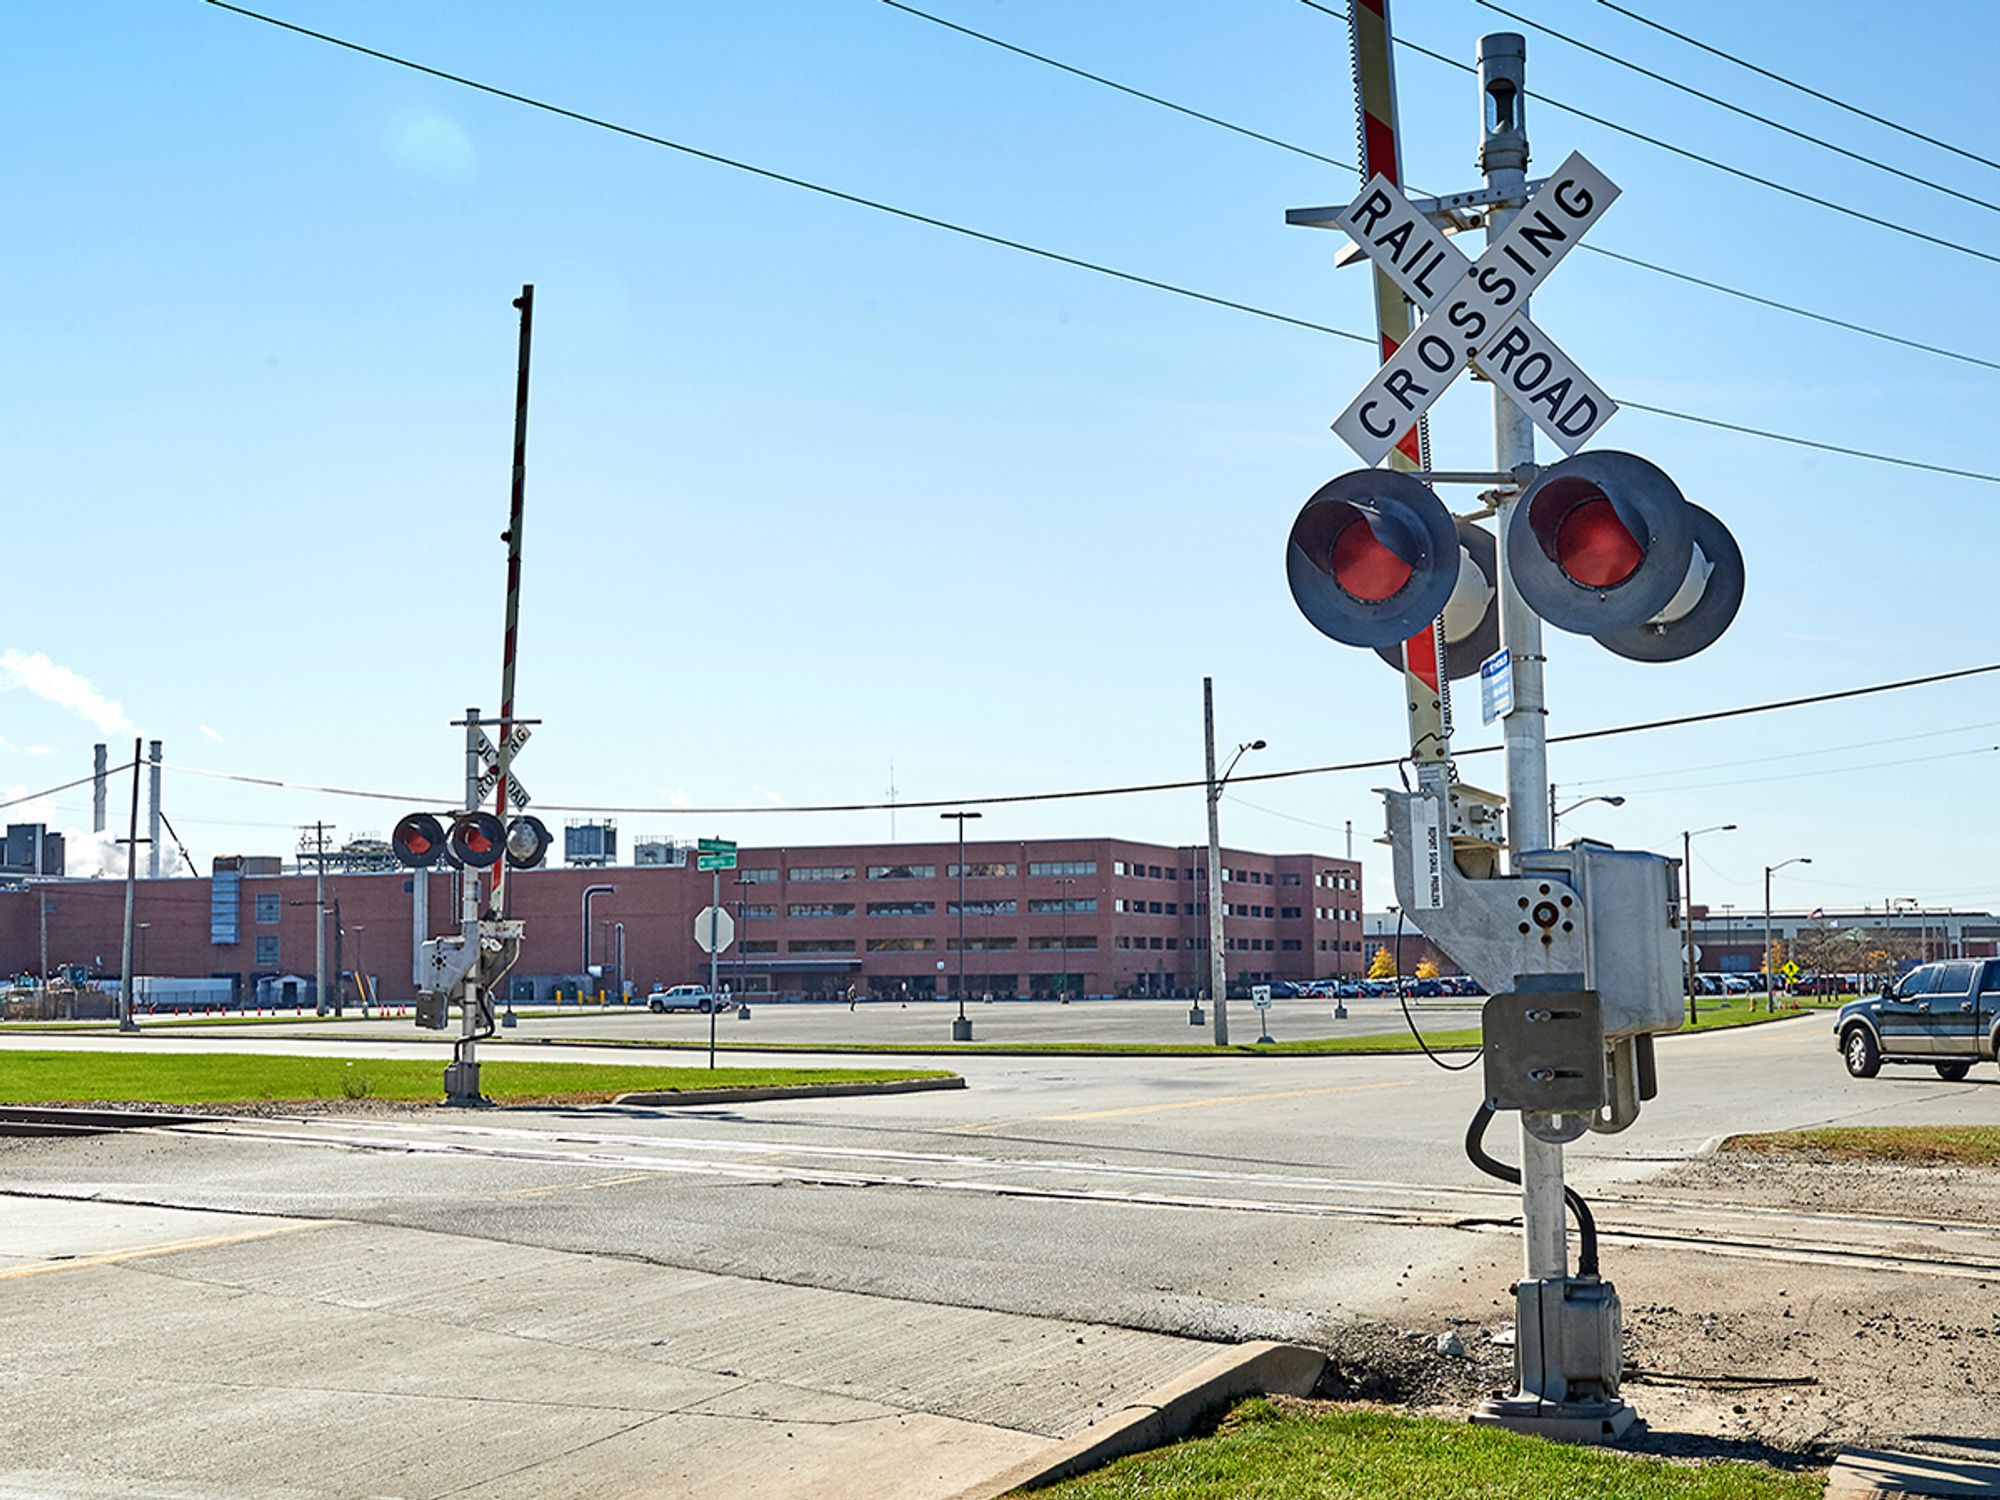 Railroad signal employee HOS exemption